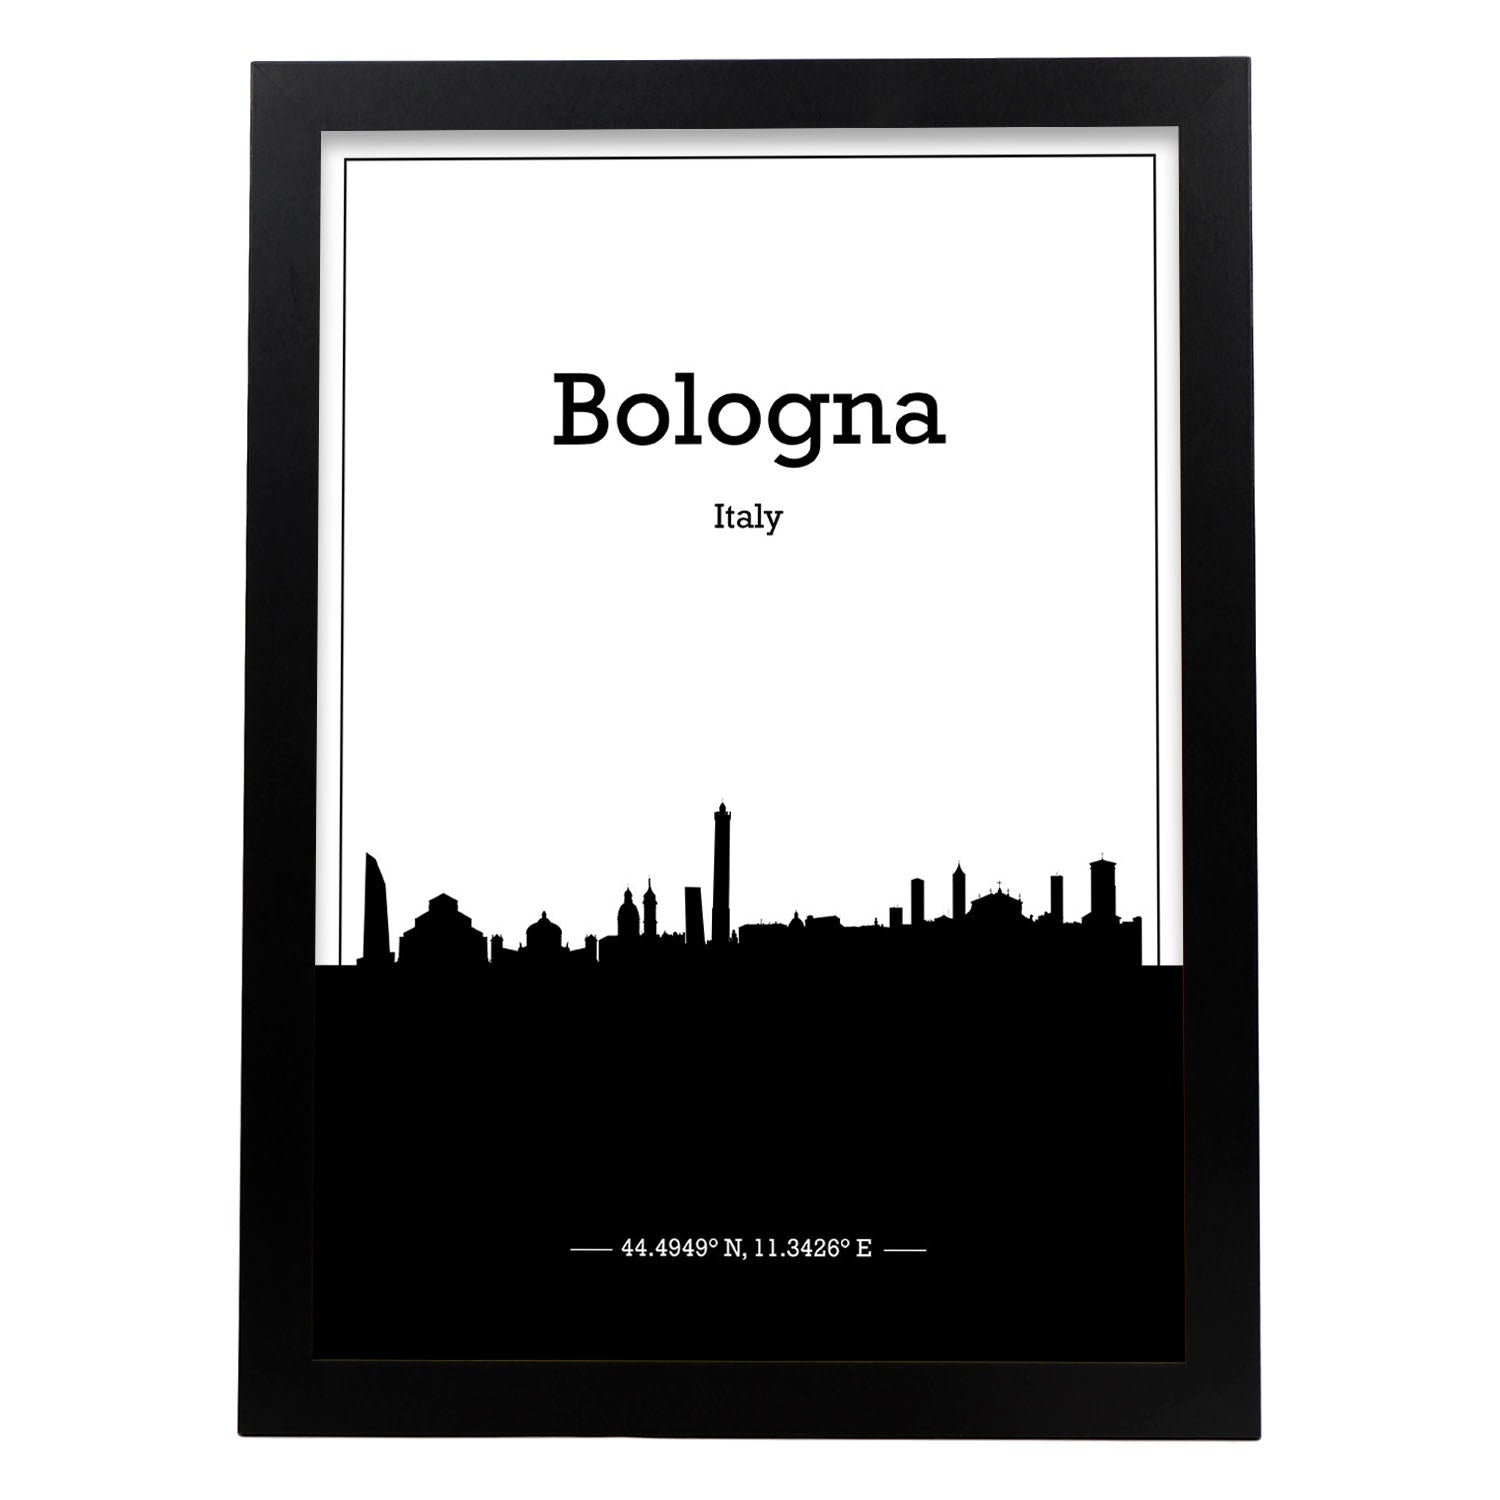 Poster con mapa de Bologna - Italia. Láminas con Skyline de ciudades de Italia con sombra negra.-Artwork-Nacnic-A4-Marco Negro-Nacnic Estudio SL